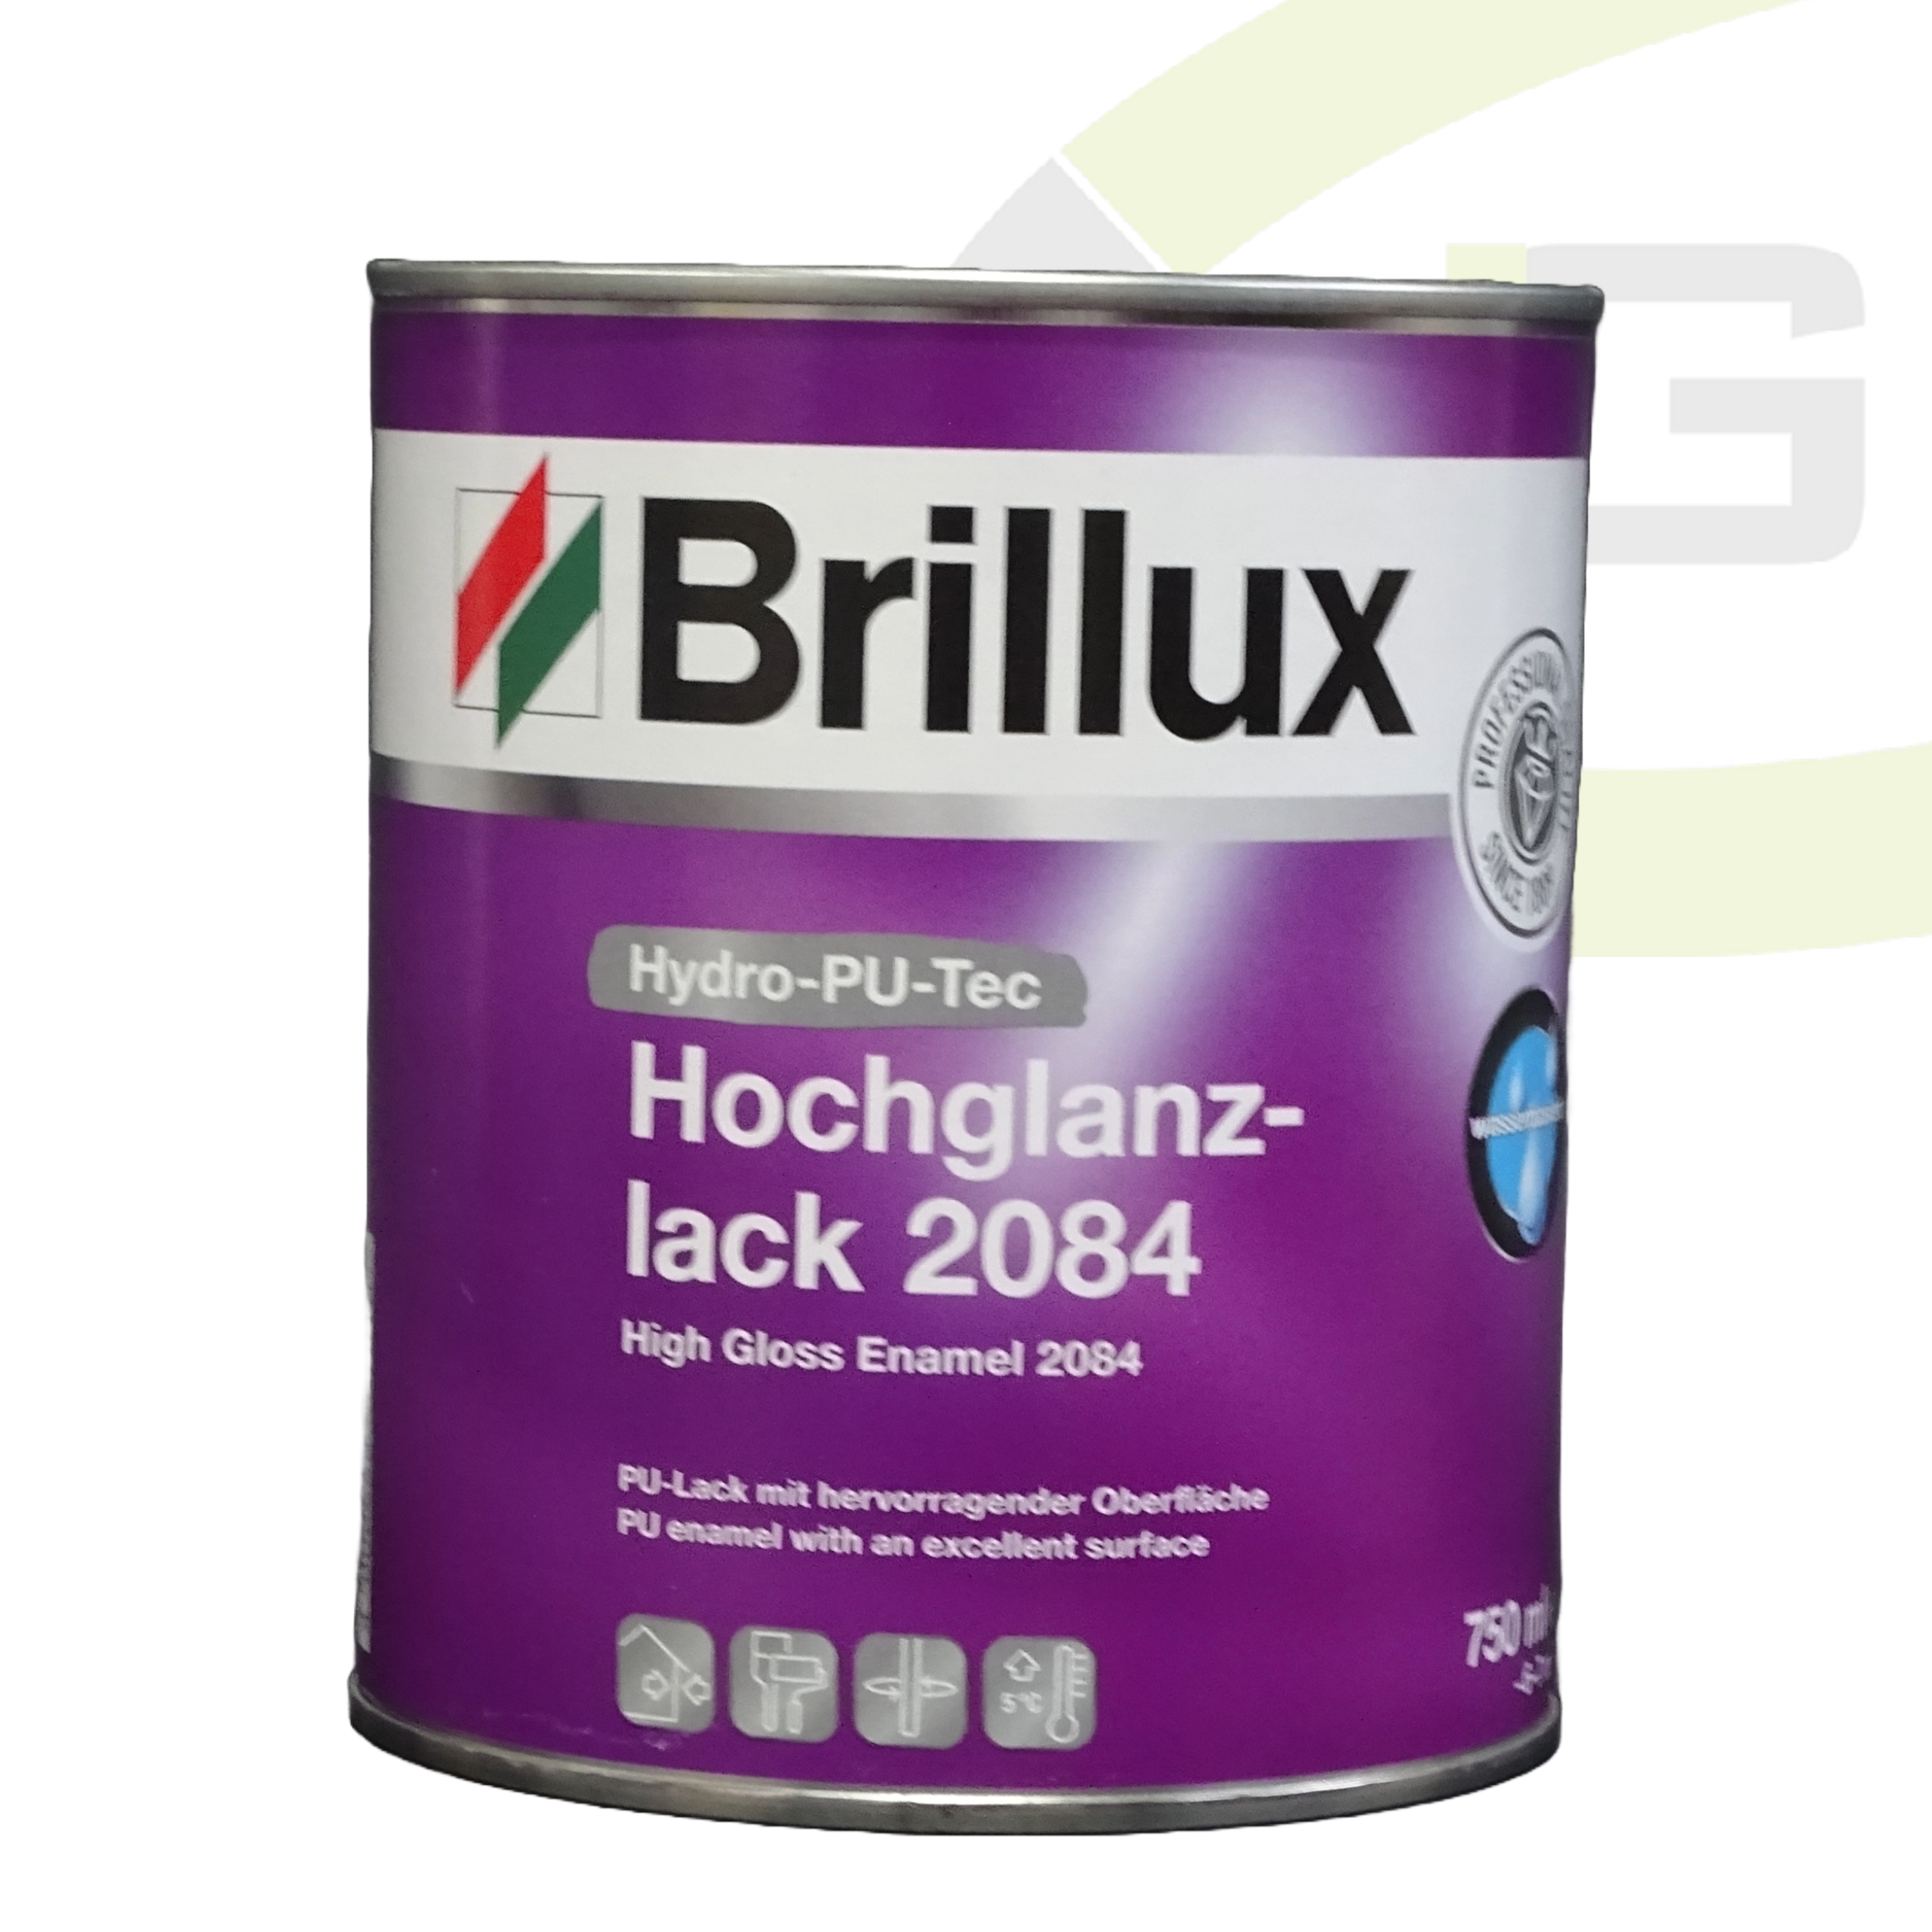 Brillux Hydro-PU-Tec Hochglanzlack 2084 weiß - 750 ml / Wasserbasierter Endlack